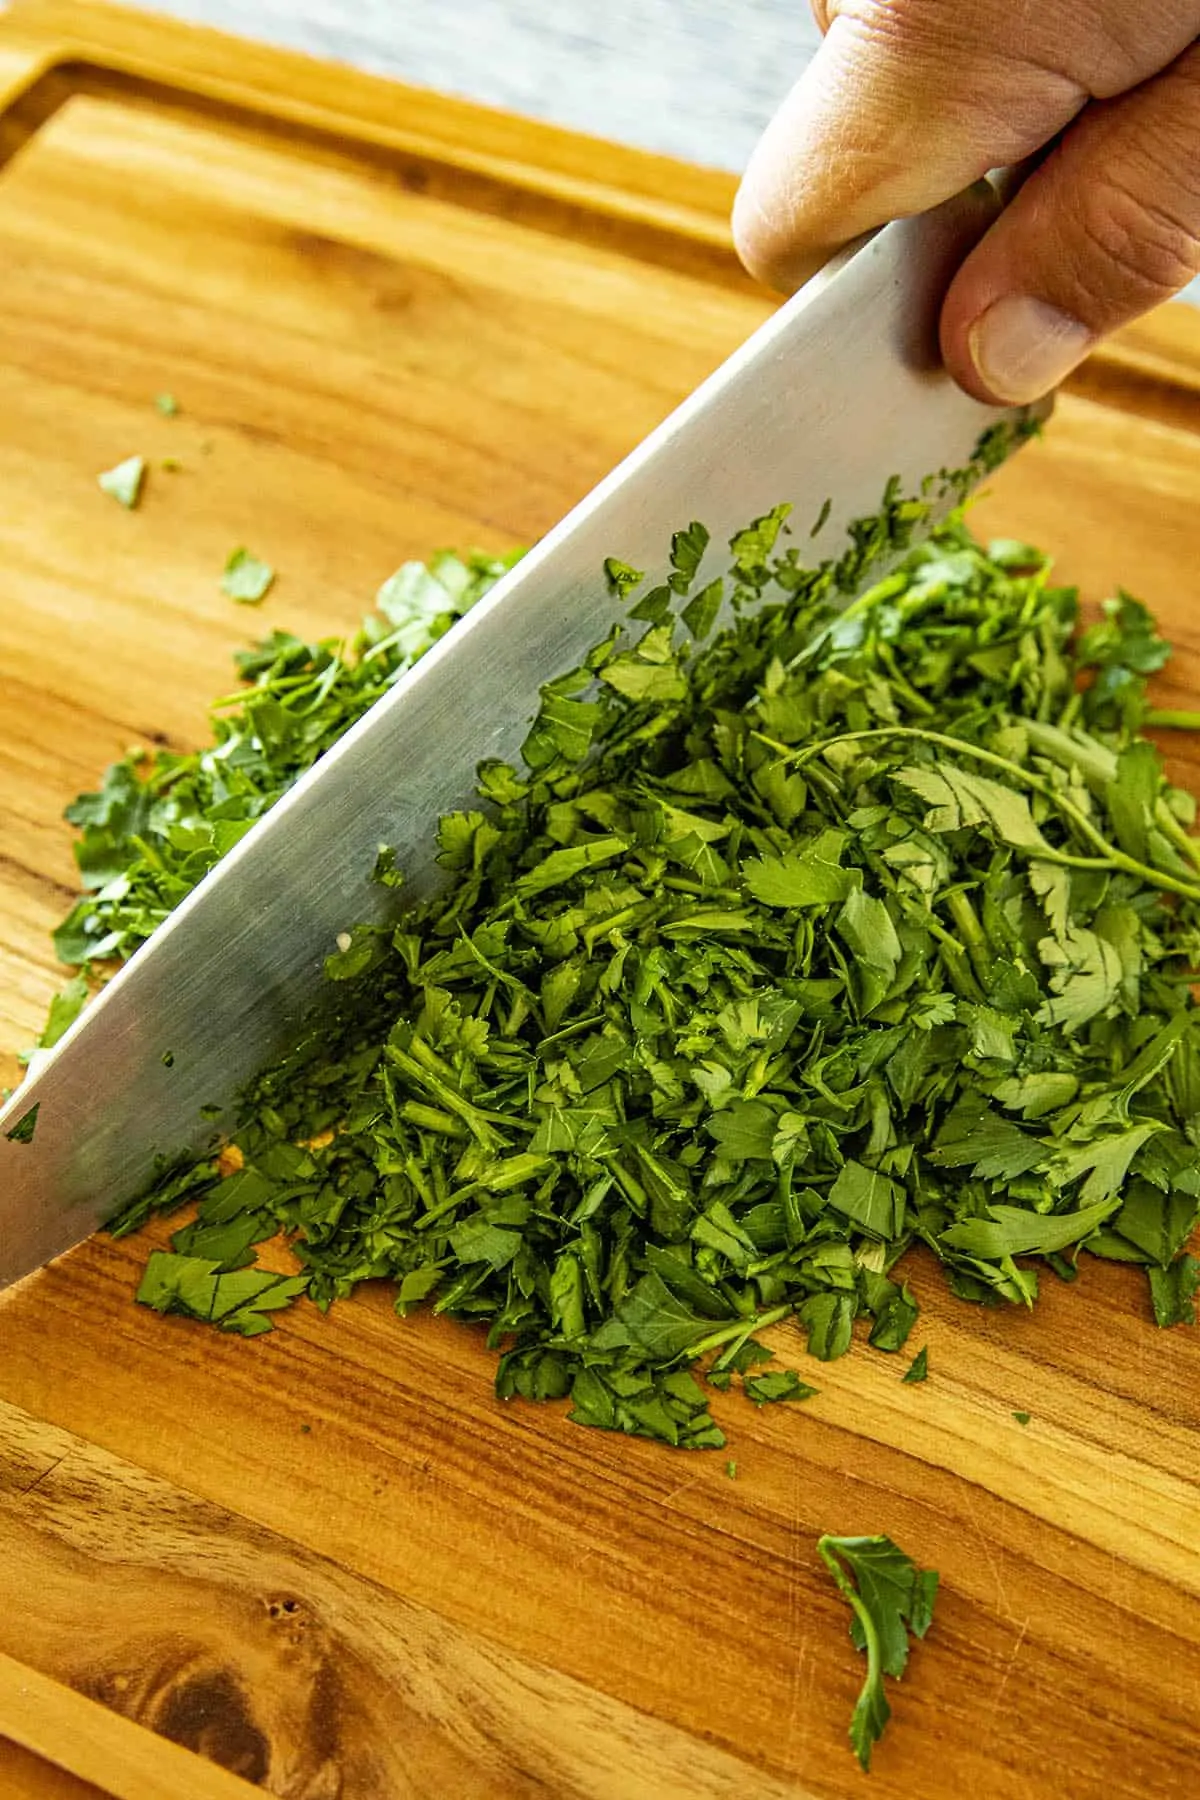 Chopping parsley to make Chimichurri